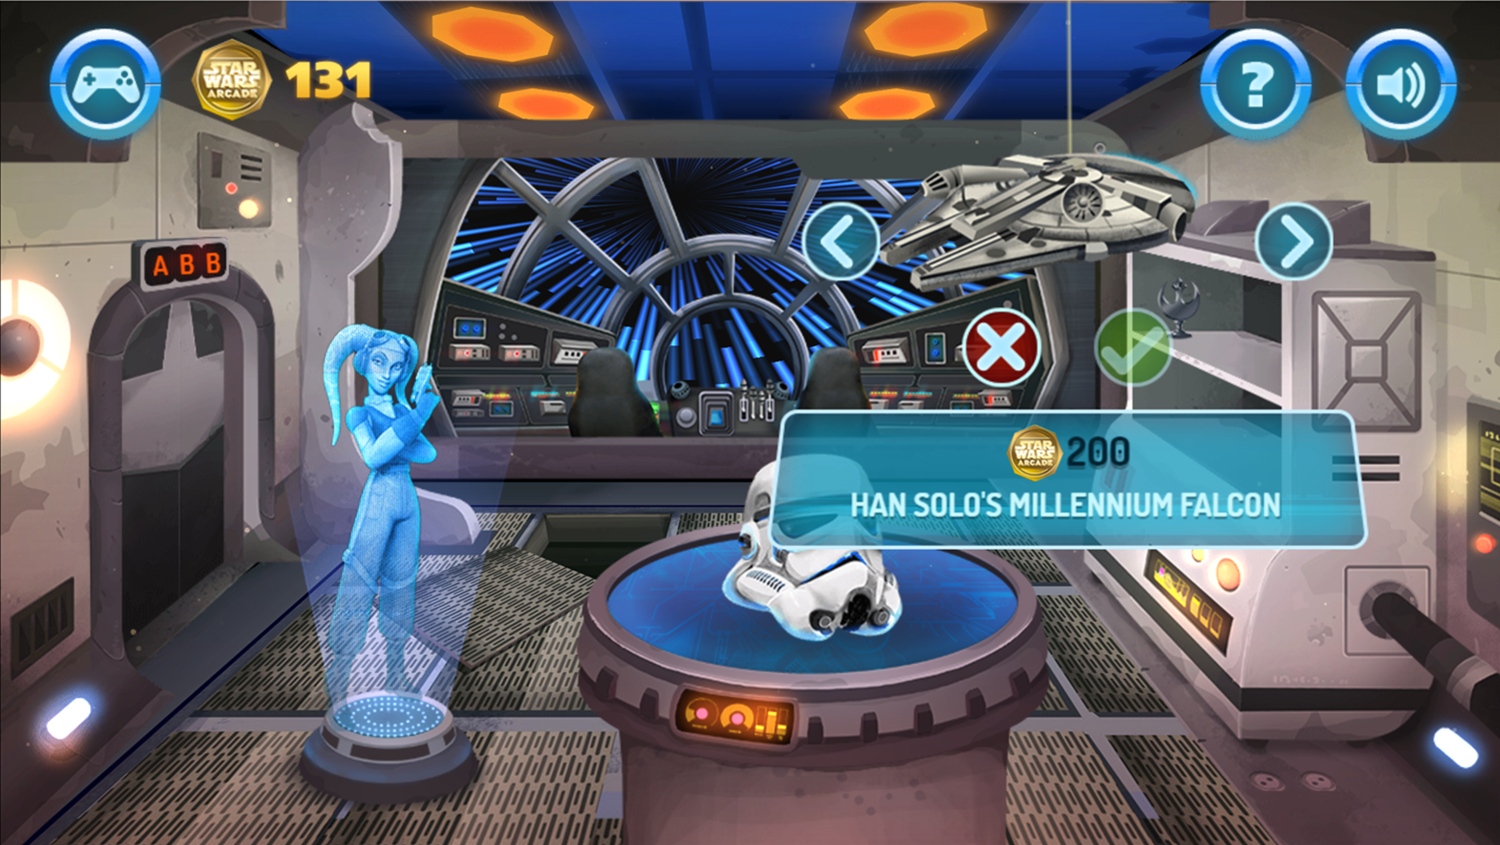 Star Wars Arcade Trophy Room Screenshot.